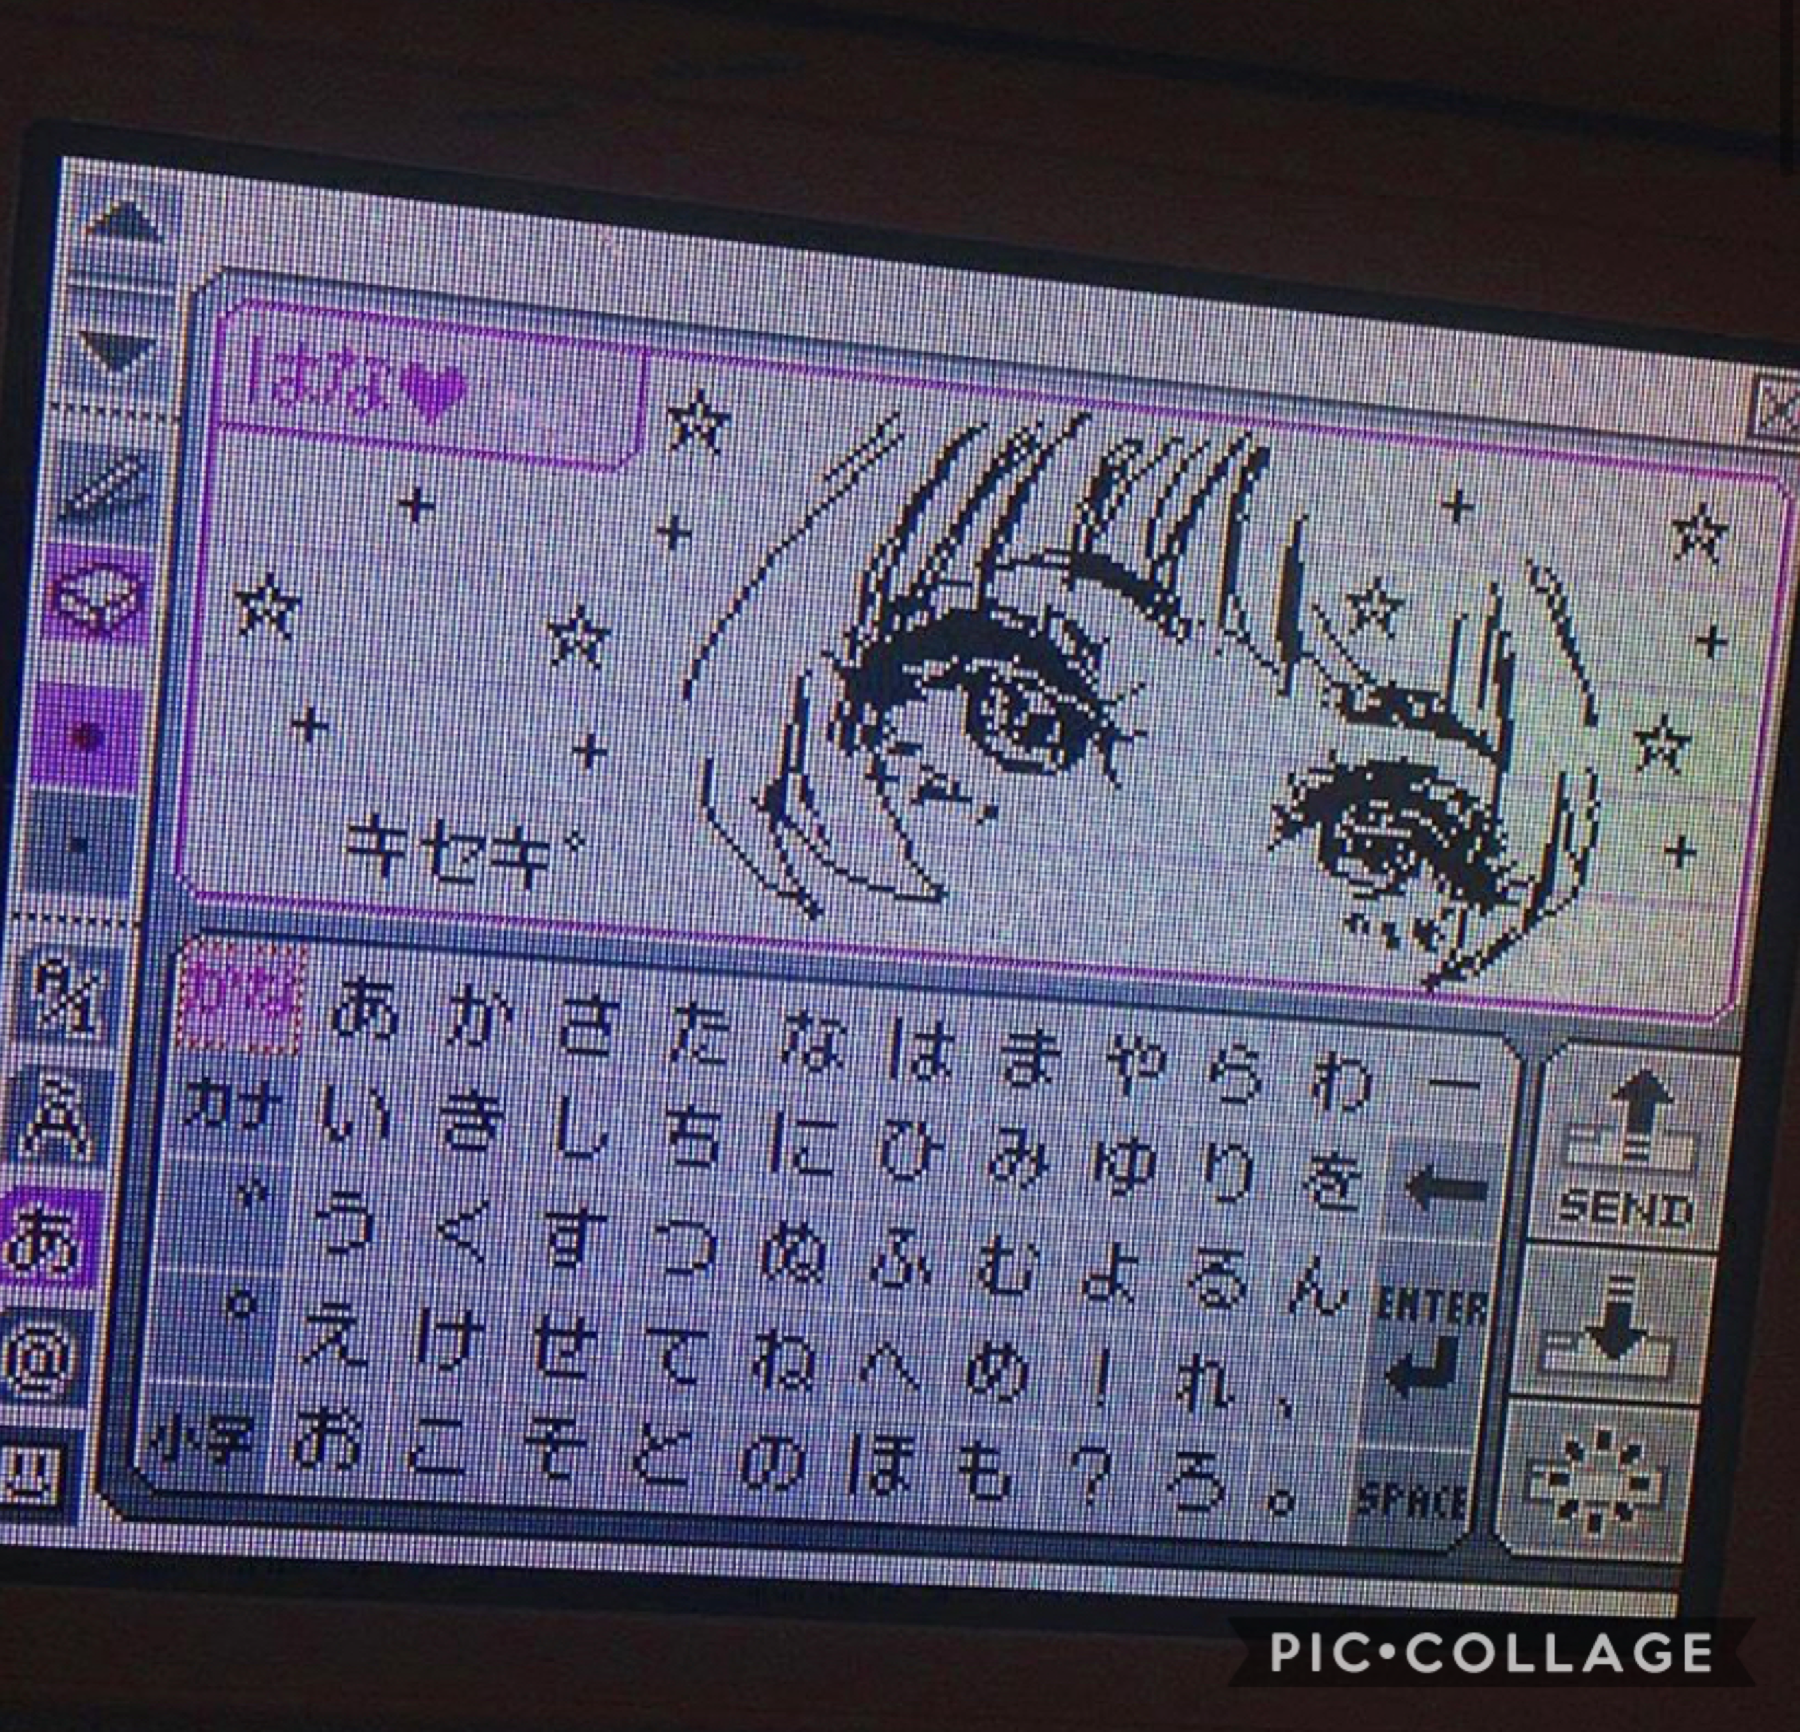 I use to draw the whole screen black lmaooo hbu